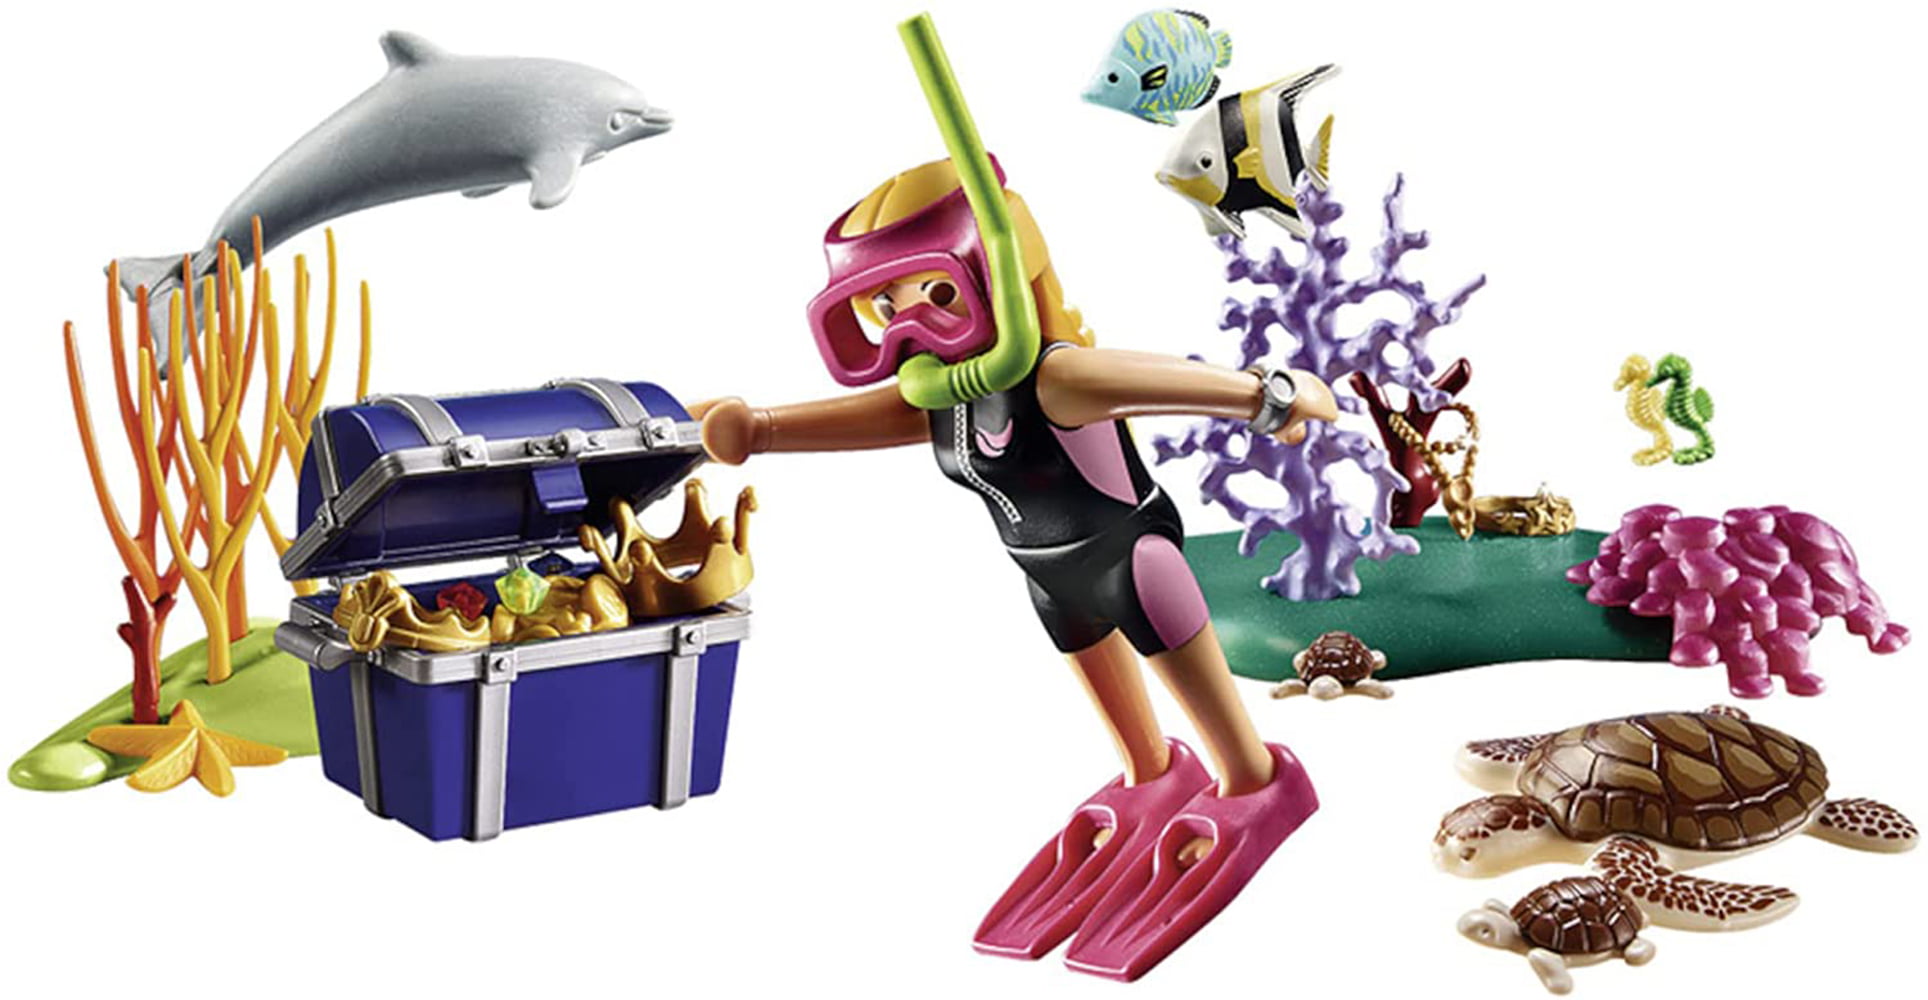 Playmobil Family Fun: Treasure Diver Gift Set – Growing Tree Toys